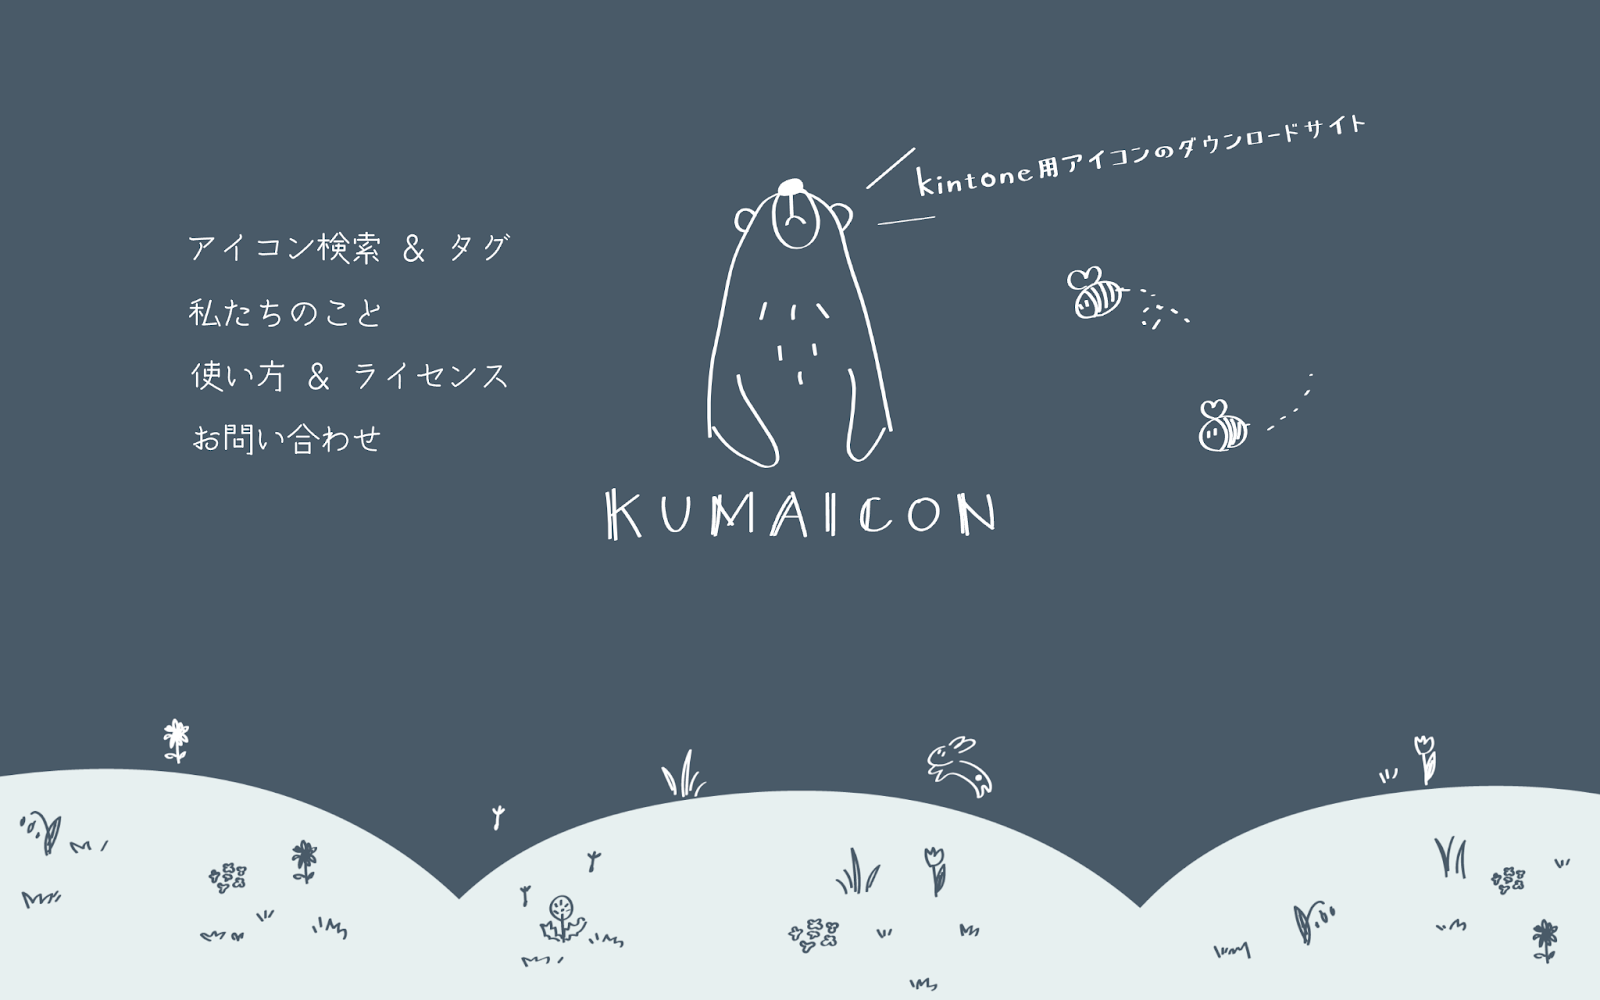 KUMA ICONの公式サイト